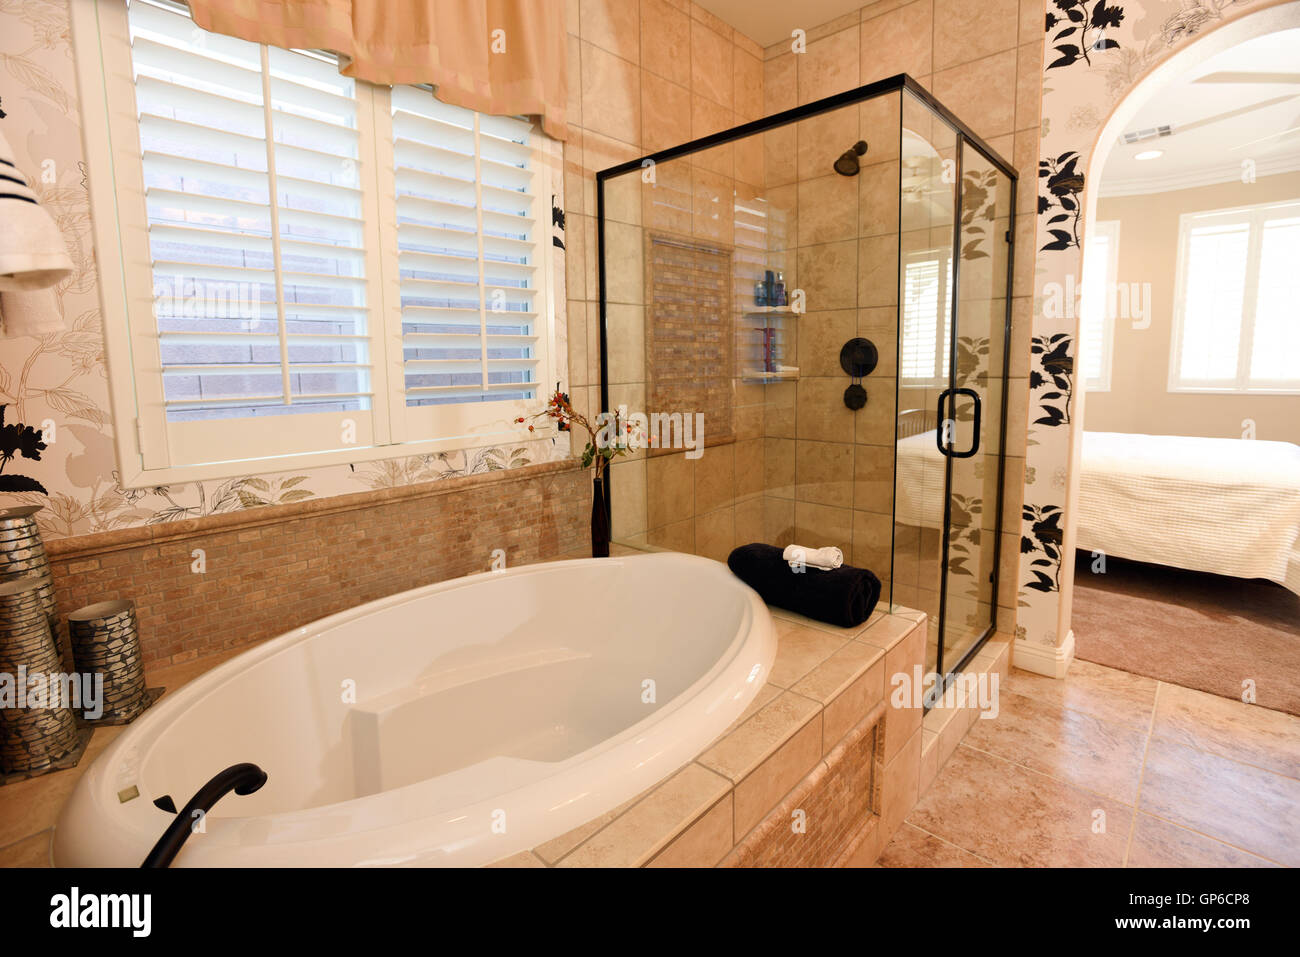 Residential master bathroom interior Stock Photo